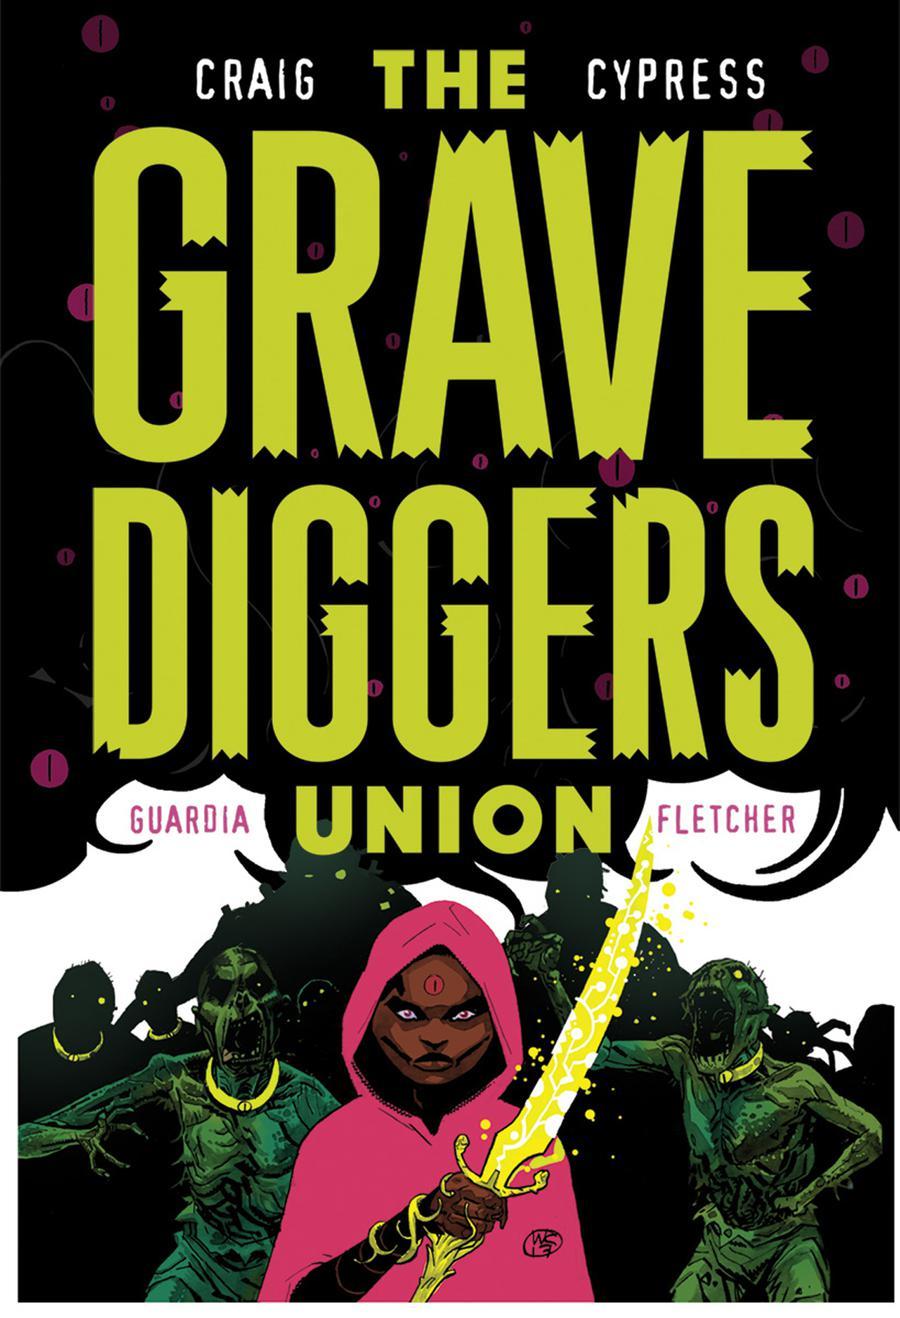 Gravediggers Union Vol. 1 #7